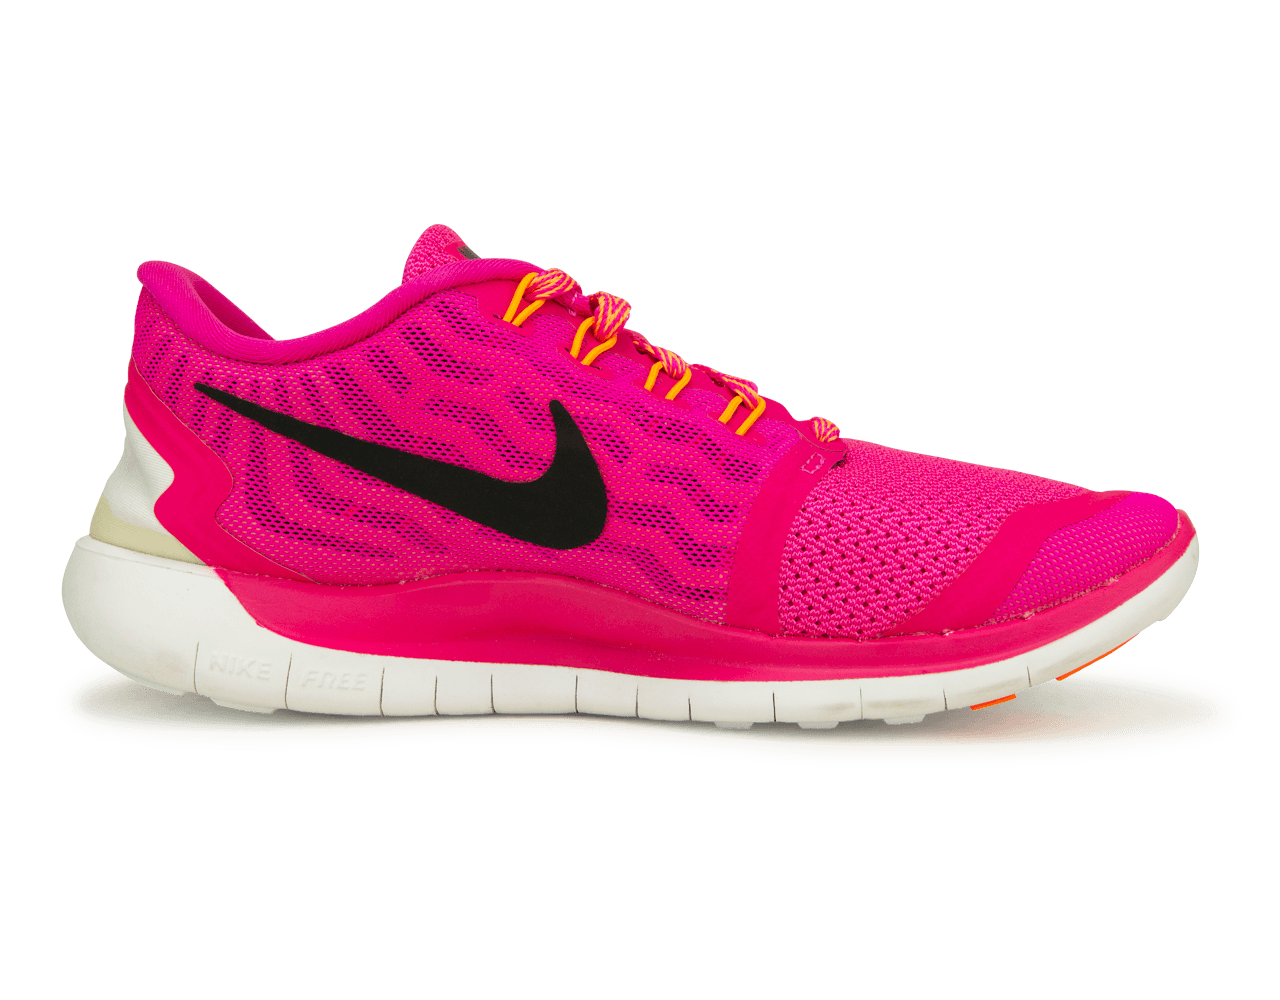 Nike Women's Free 5.0 Running Shoes Bright Pink/Black/White Side